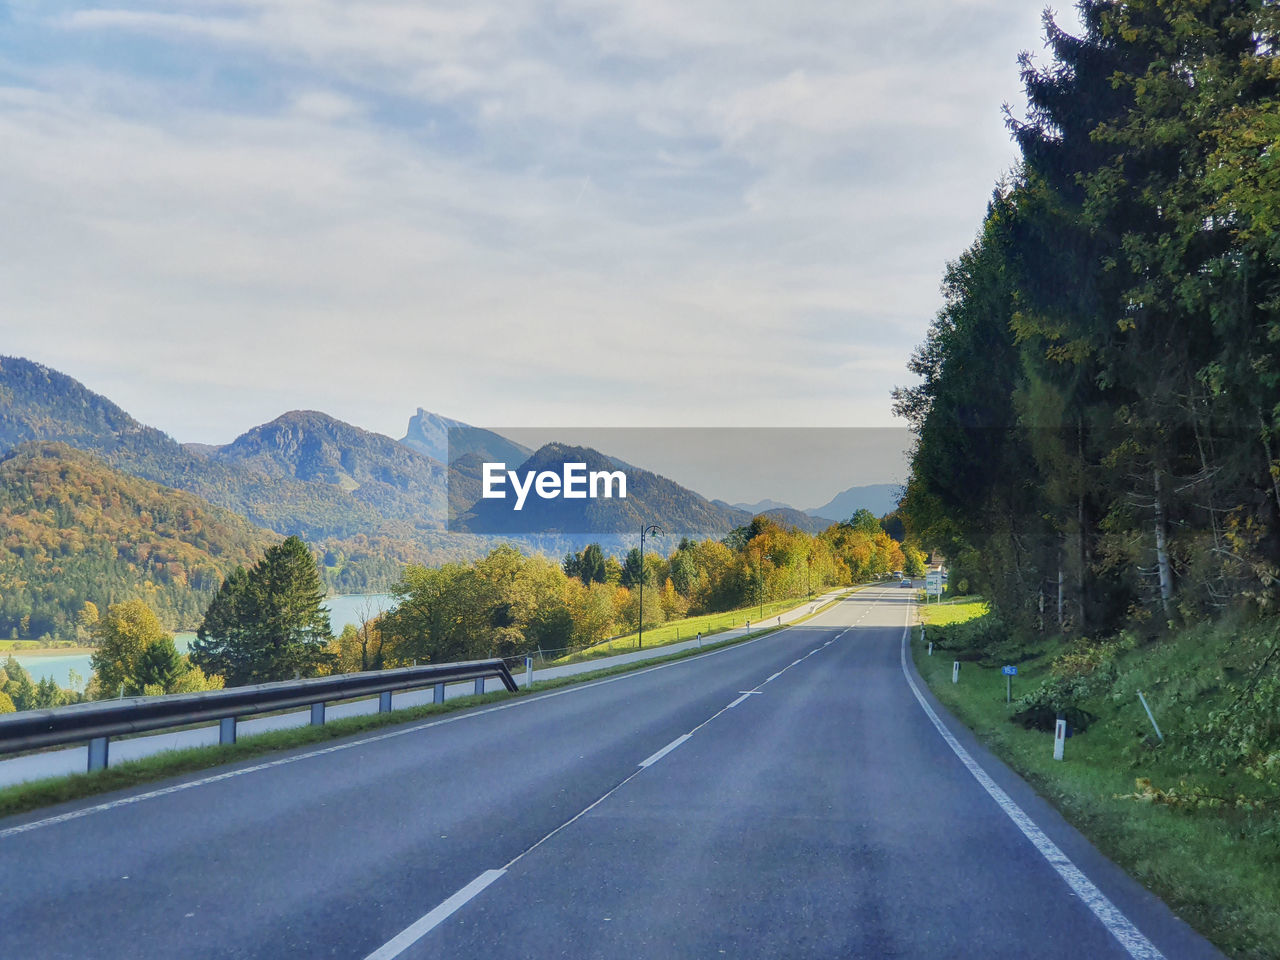 European road with mountains view.